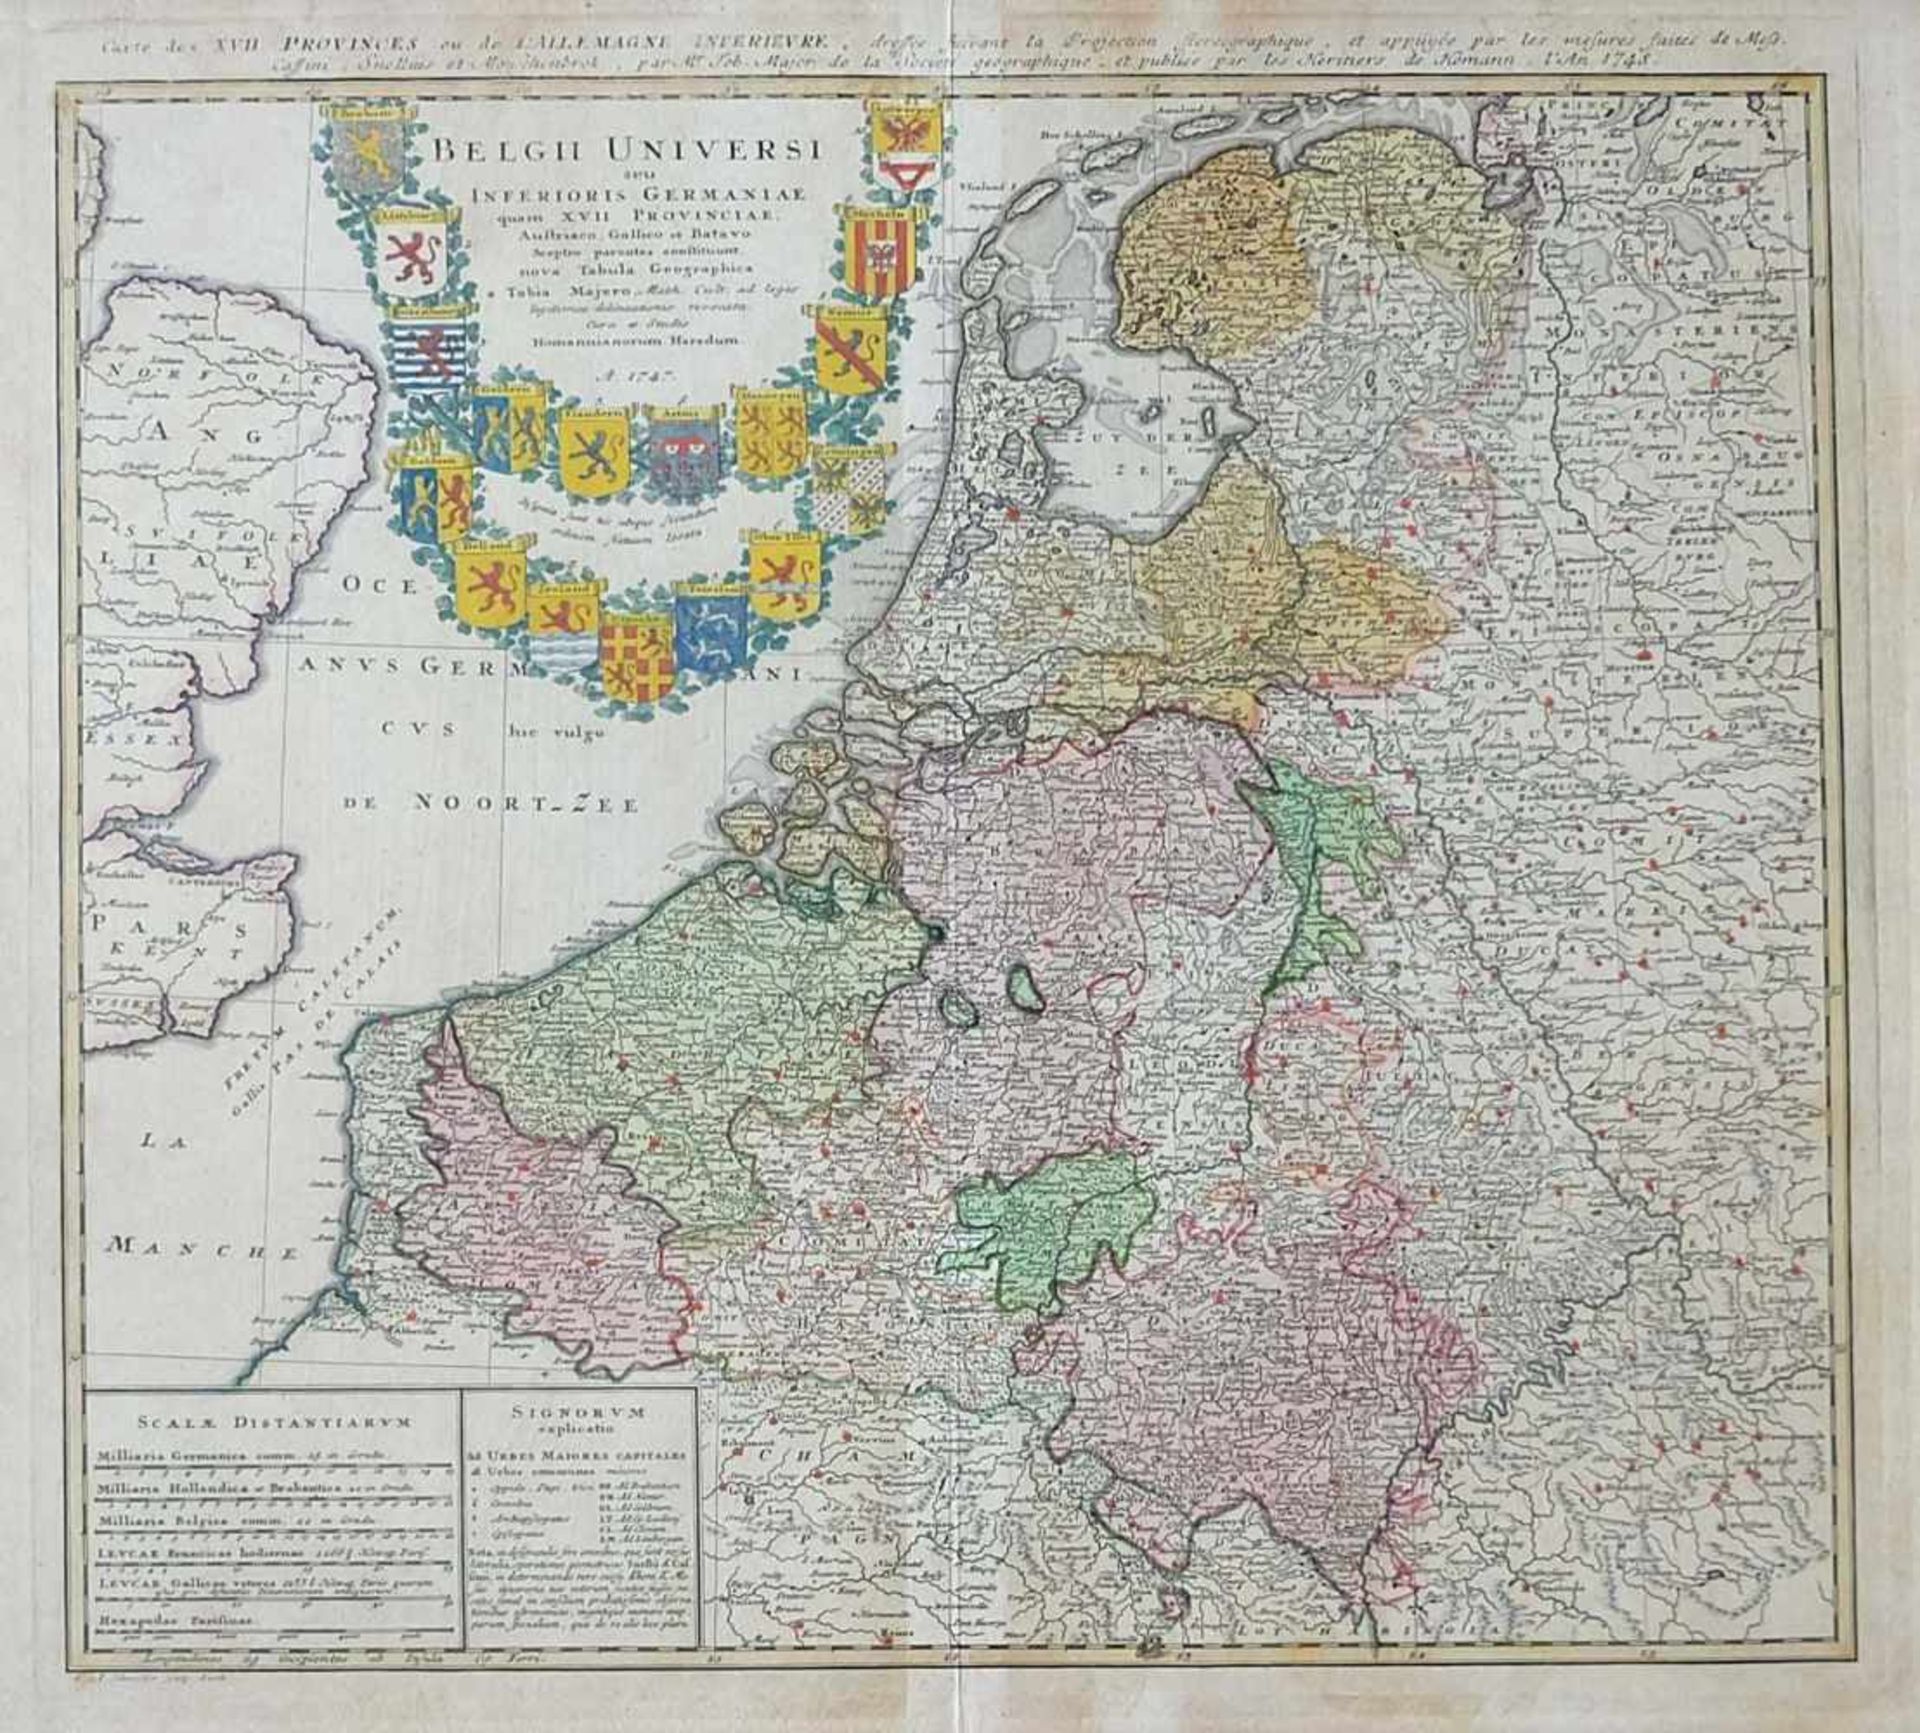 BELGIEN/ NIEDERLANDE, Kupferstichkarte, altcoloriert, Belgii Universi, Homann Erben/ Augsburg